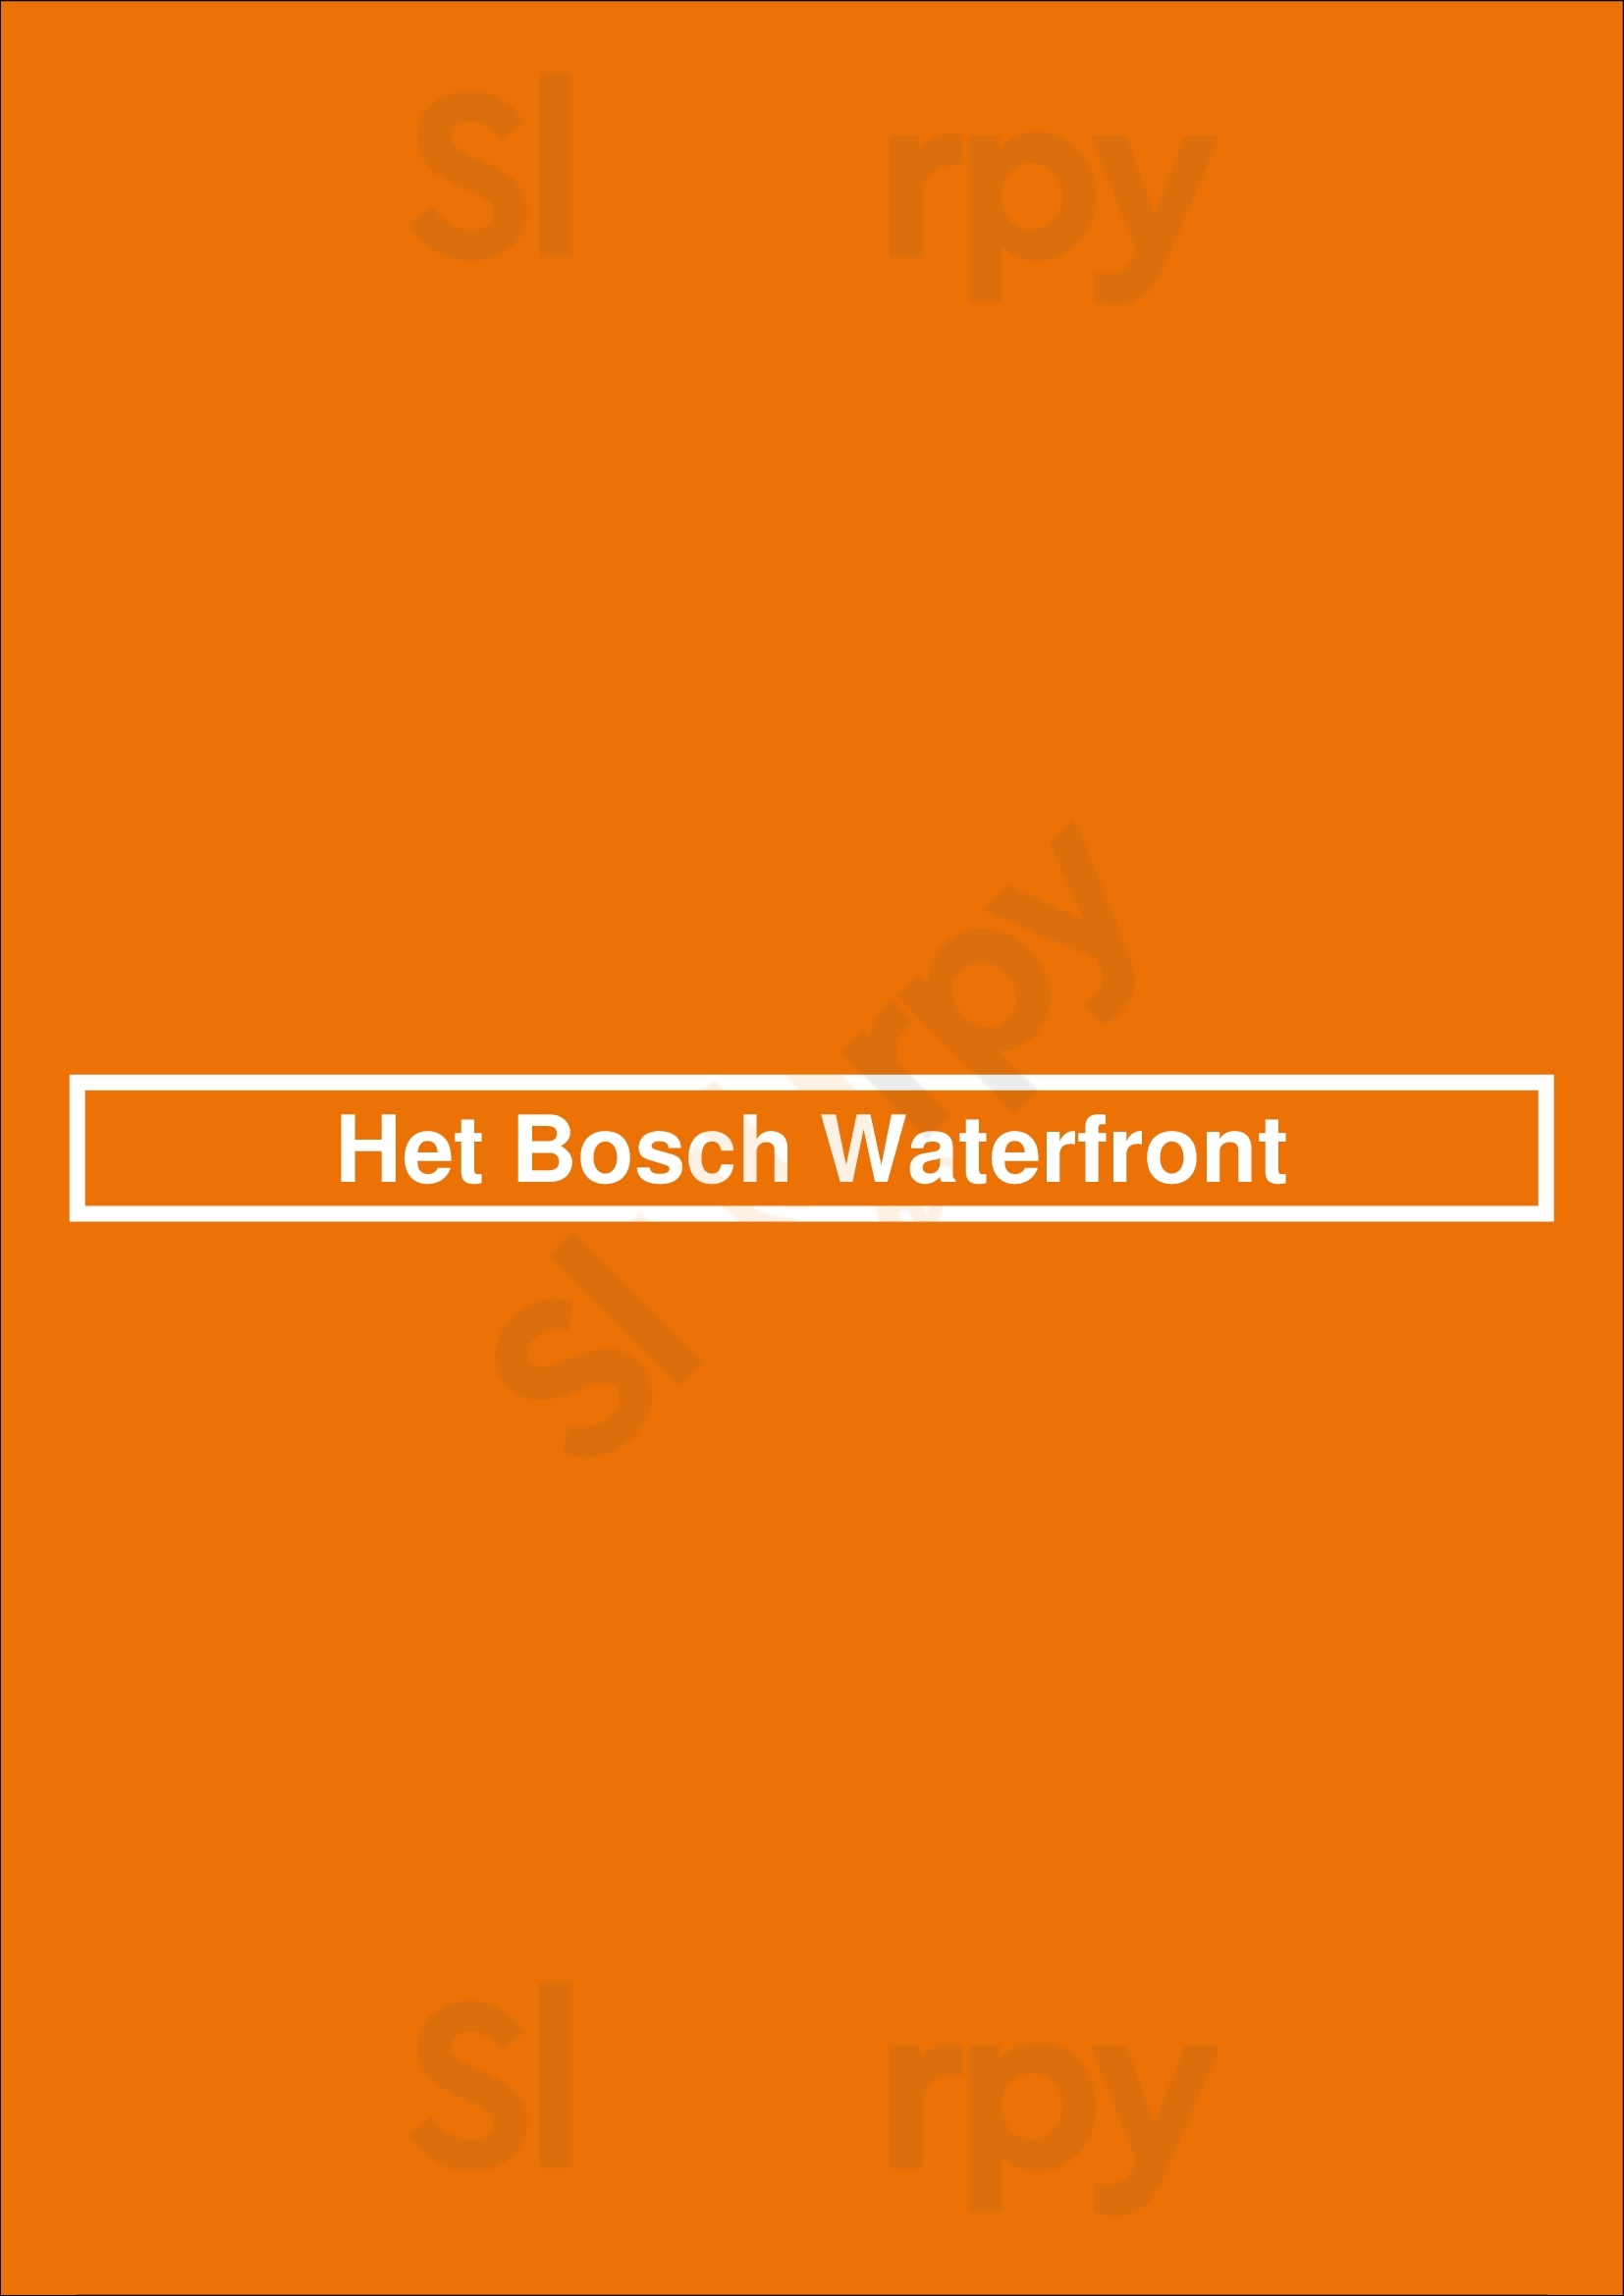 Het Bosch Waterfront Amsterdam Menu - 1